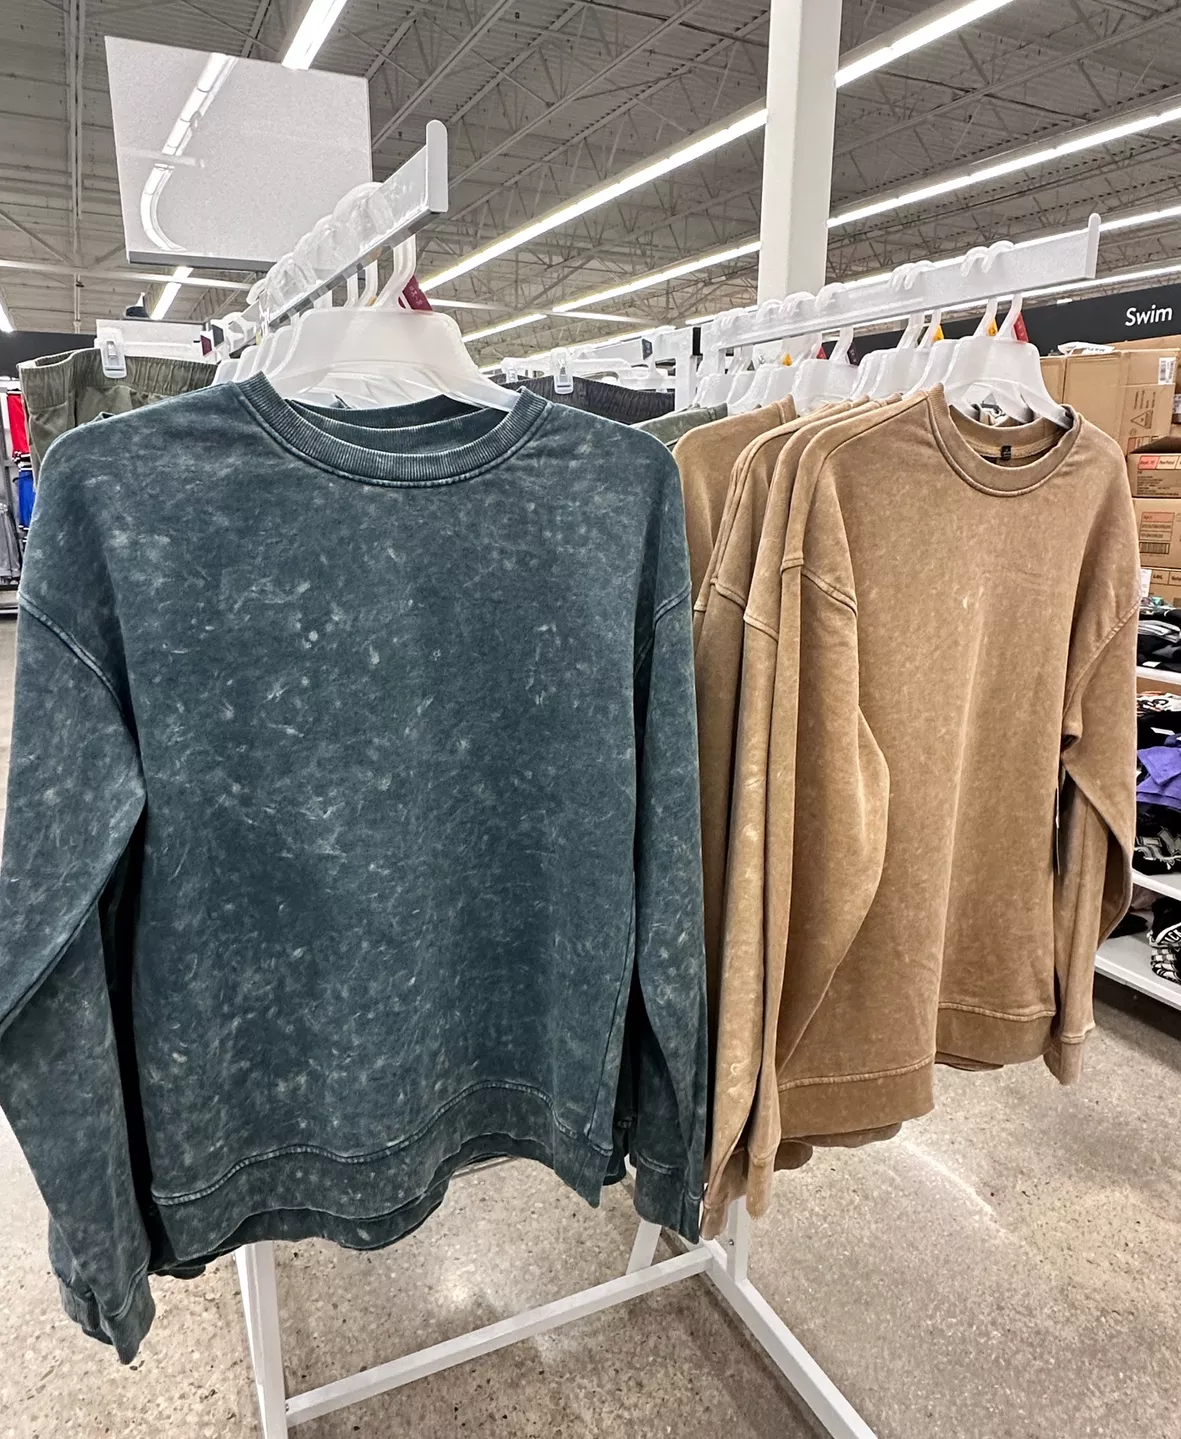 Walmart fashion Walmart finds  @liketoknow